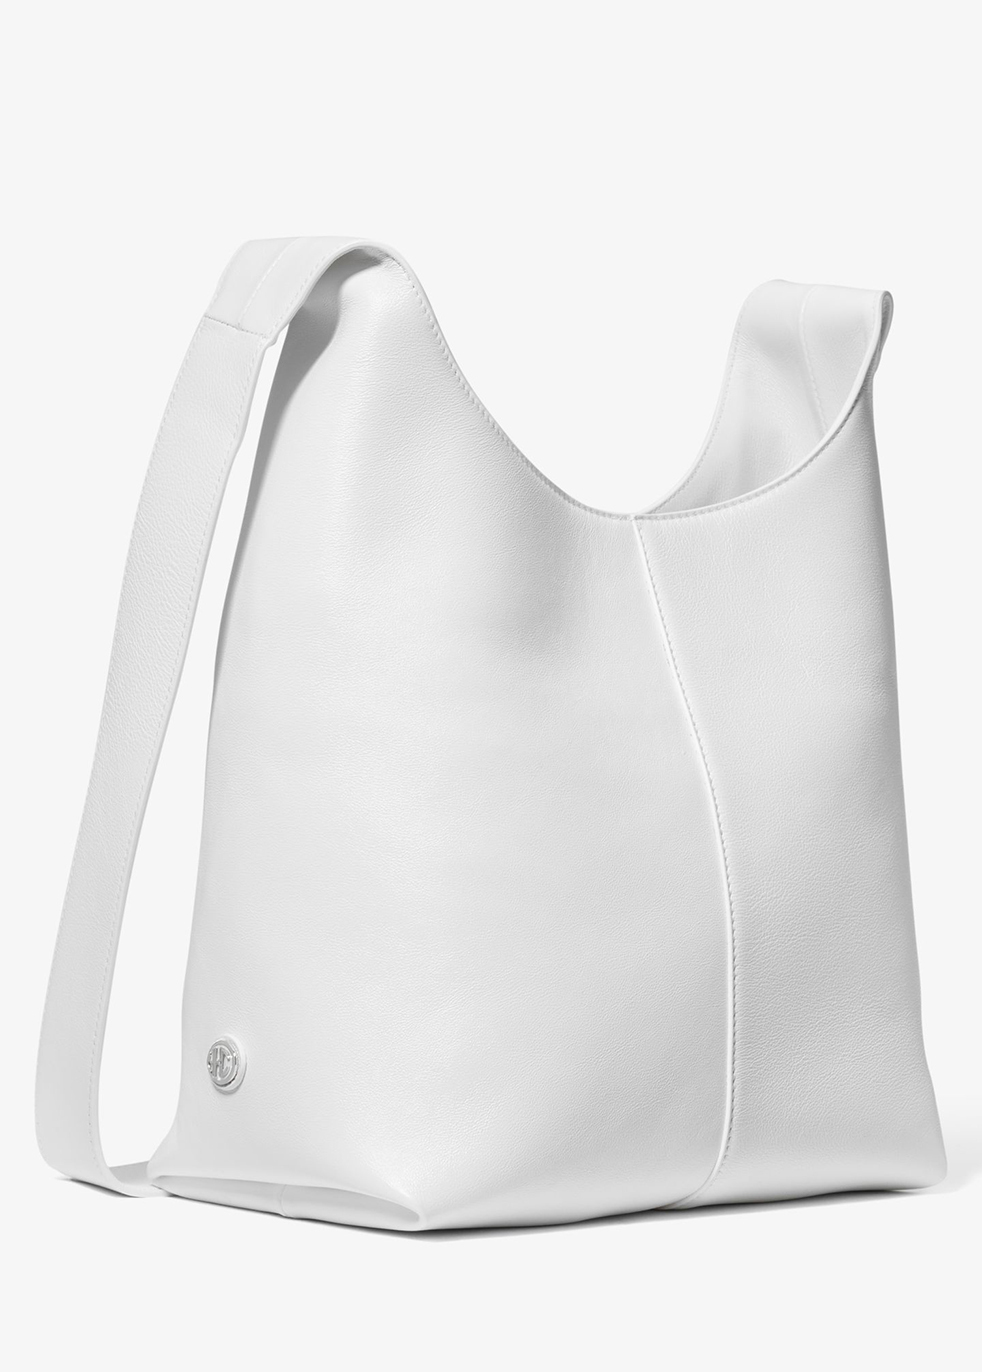 Michael Kors Collection Bags  Handbags for Women for sale  eBay